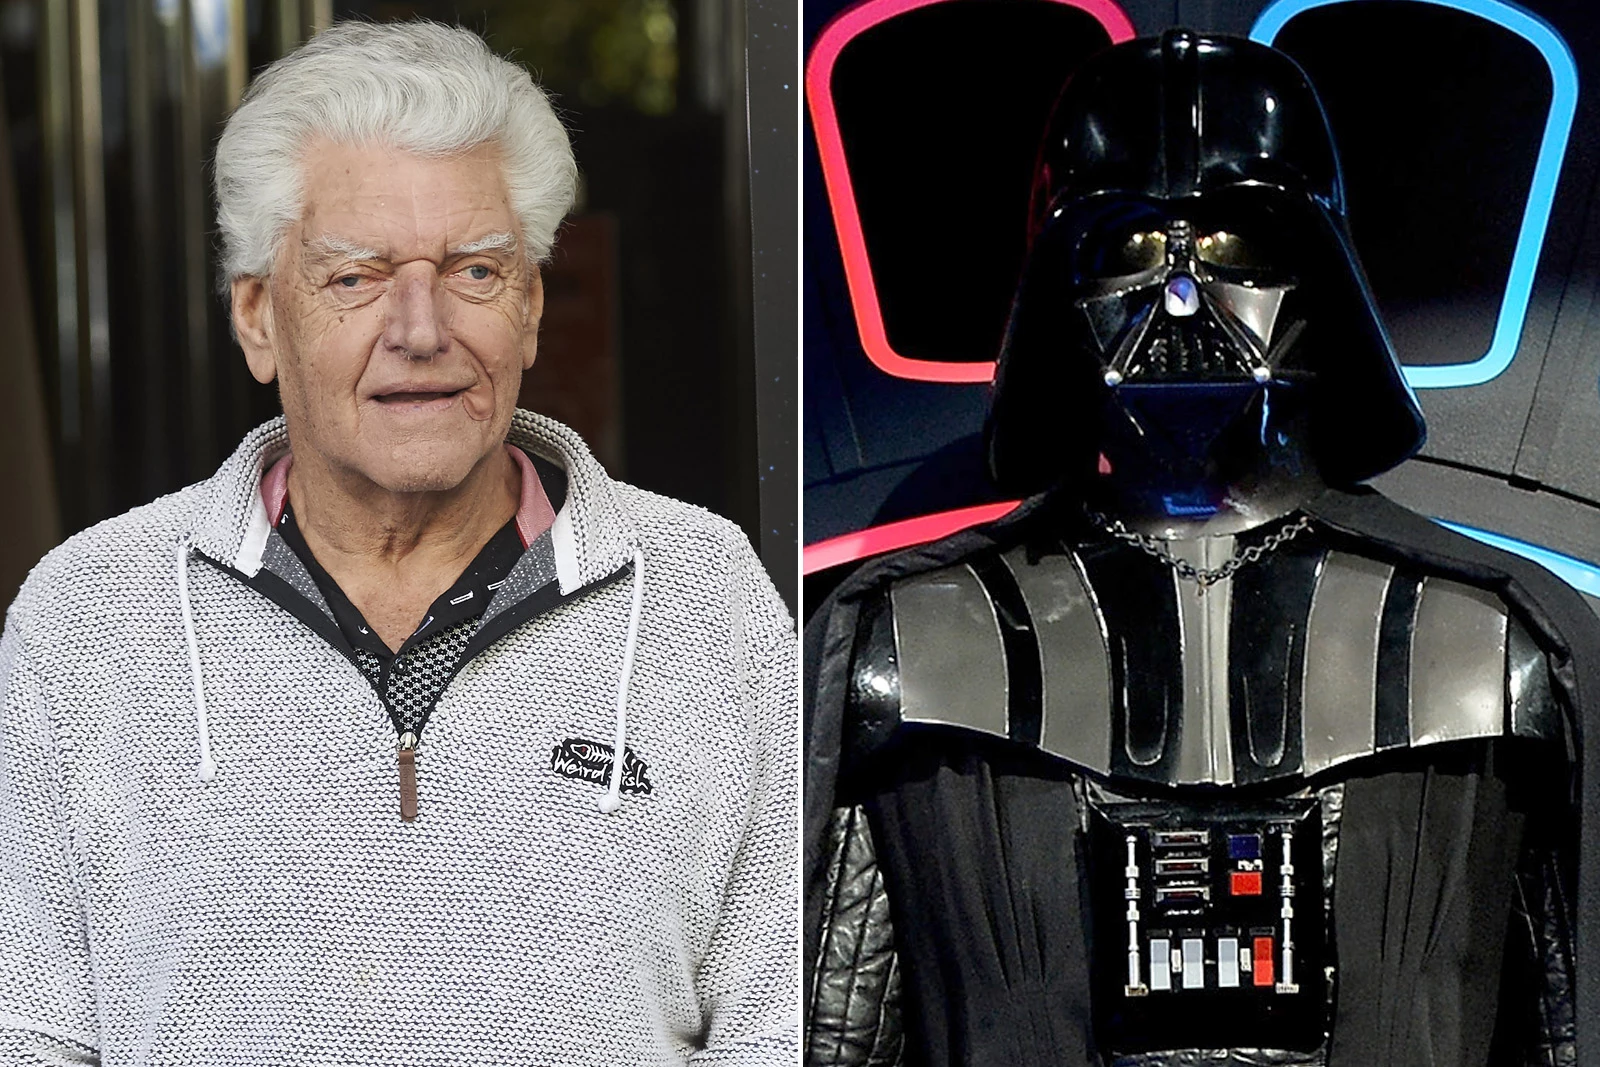 Darth Vader actor Dave Prowse dies aged 85, Star Wars